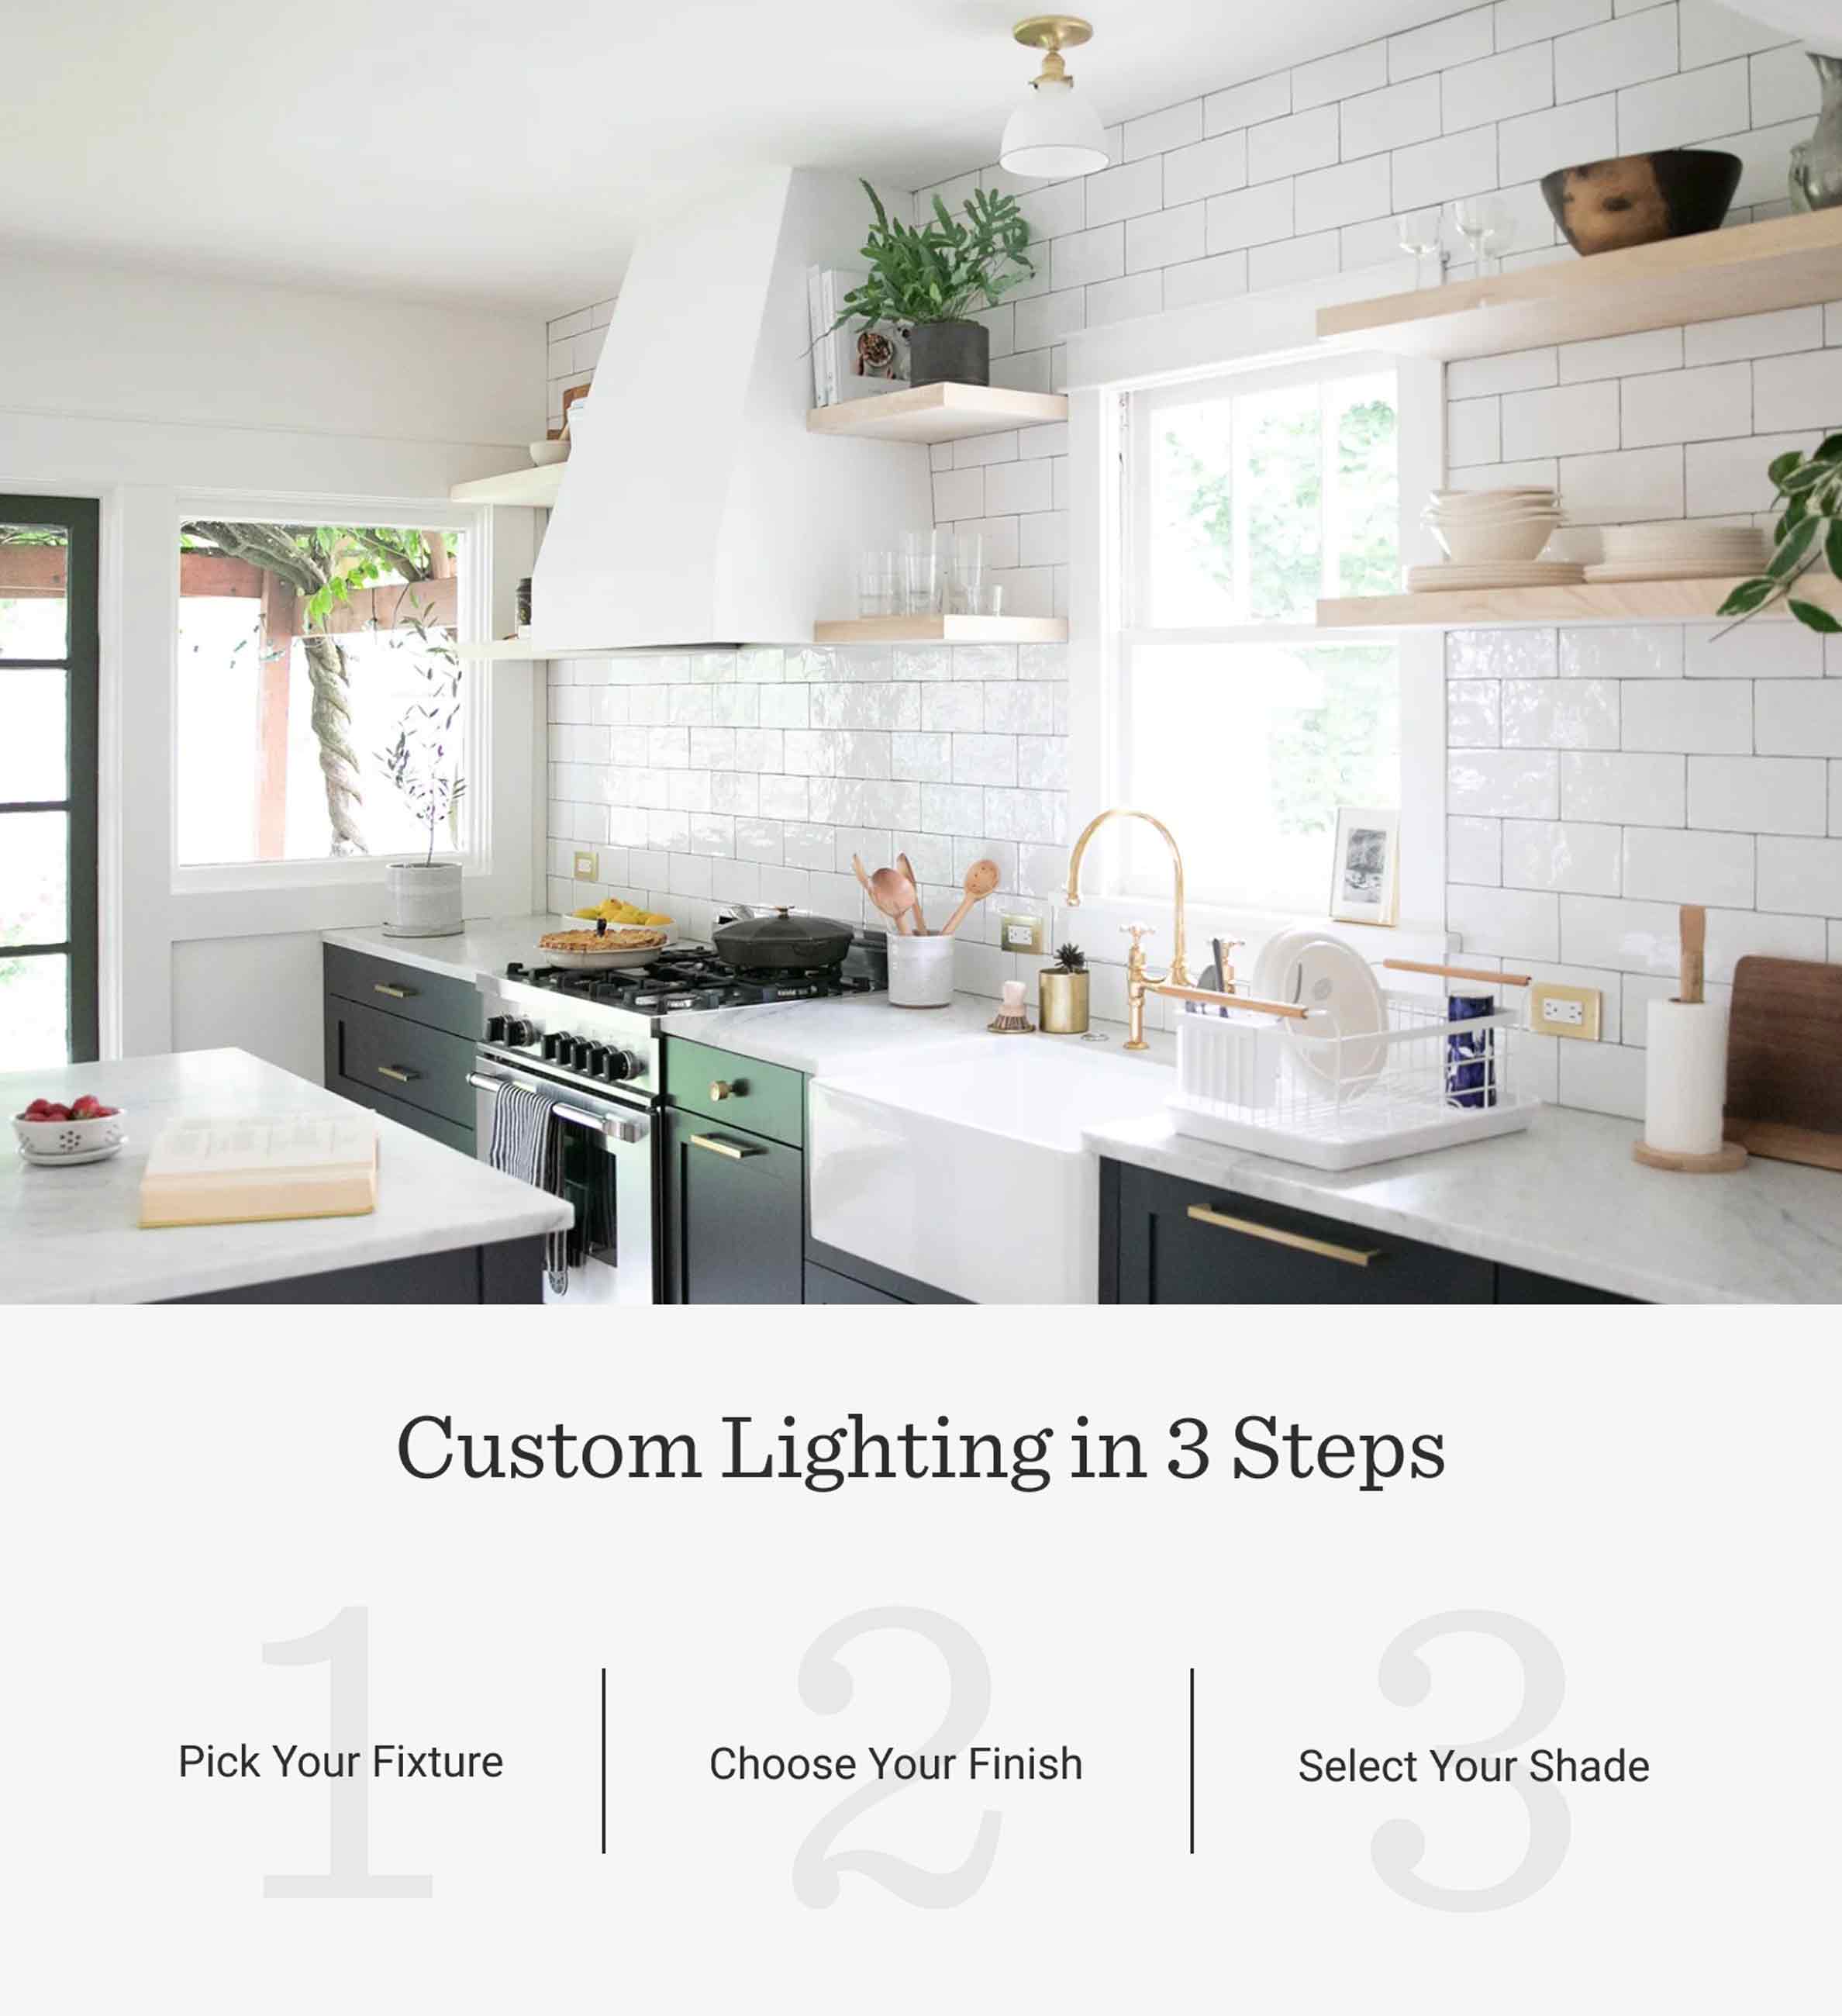 Custom lighting in three easy steps. 